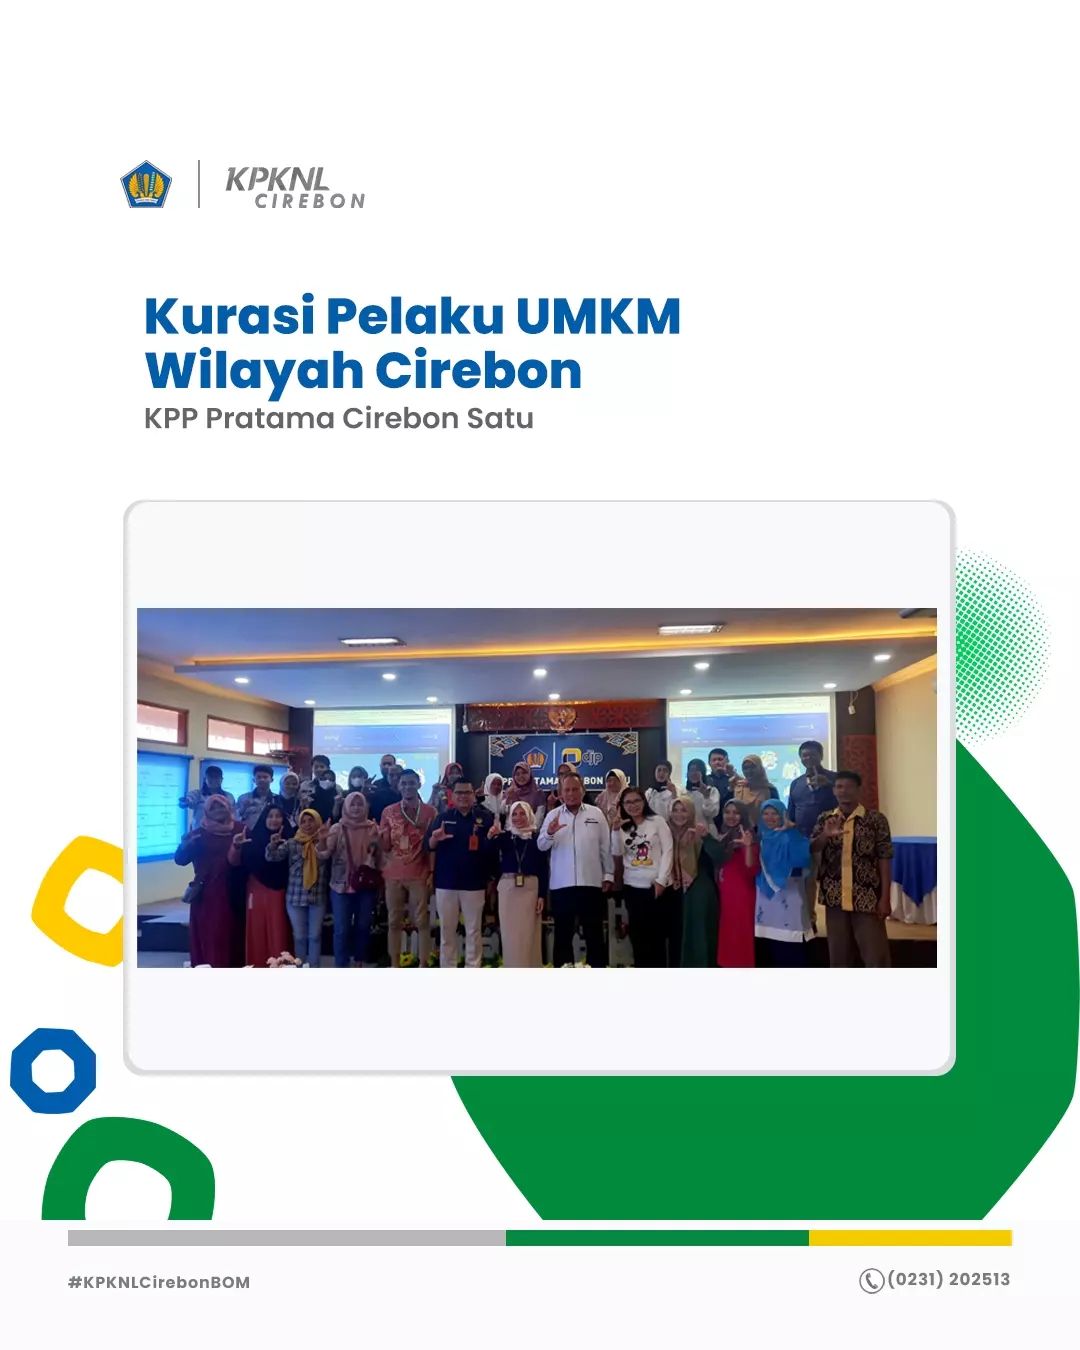 Kurasi Pelaku UMKM Wilayah Cirebon di KPP Pratama Cirebon Satu